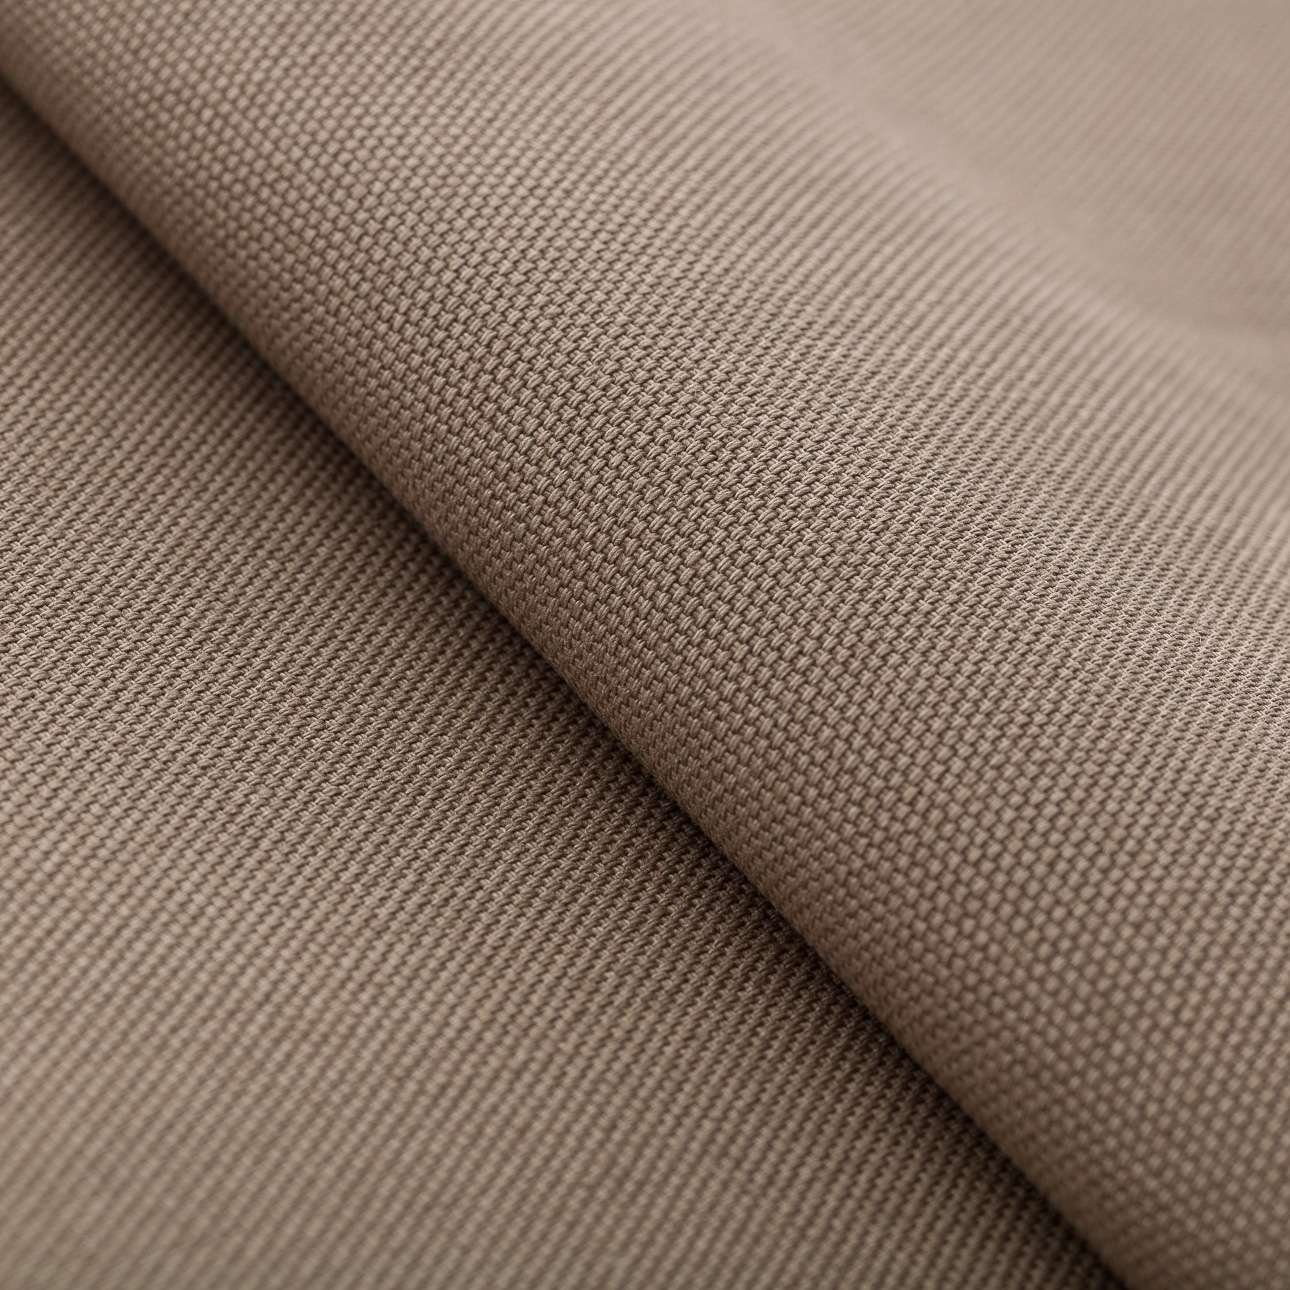 Vorhang mit Kräuselband cm, Cotton Dekoria Panama, 130 grau-braun 40 x